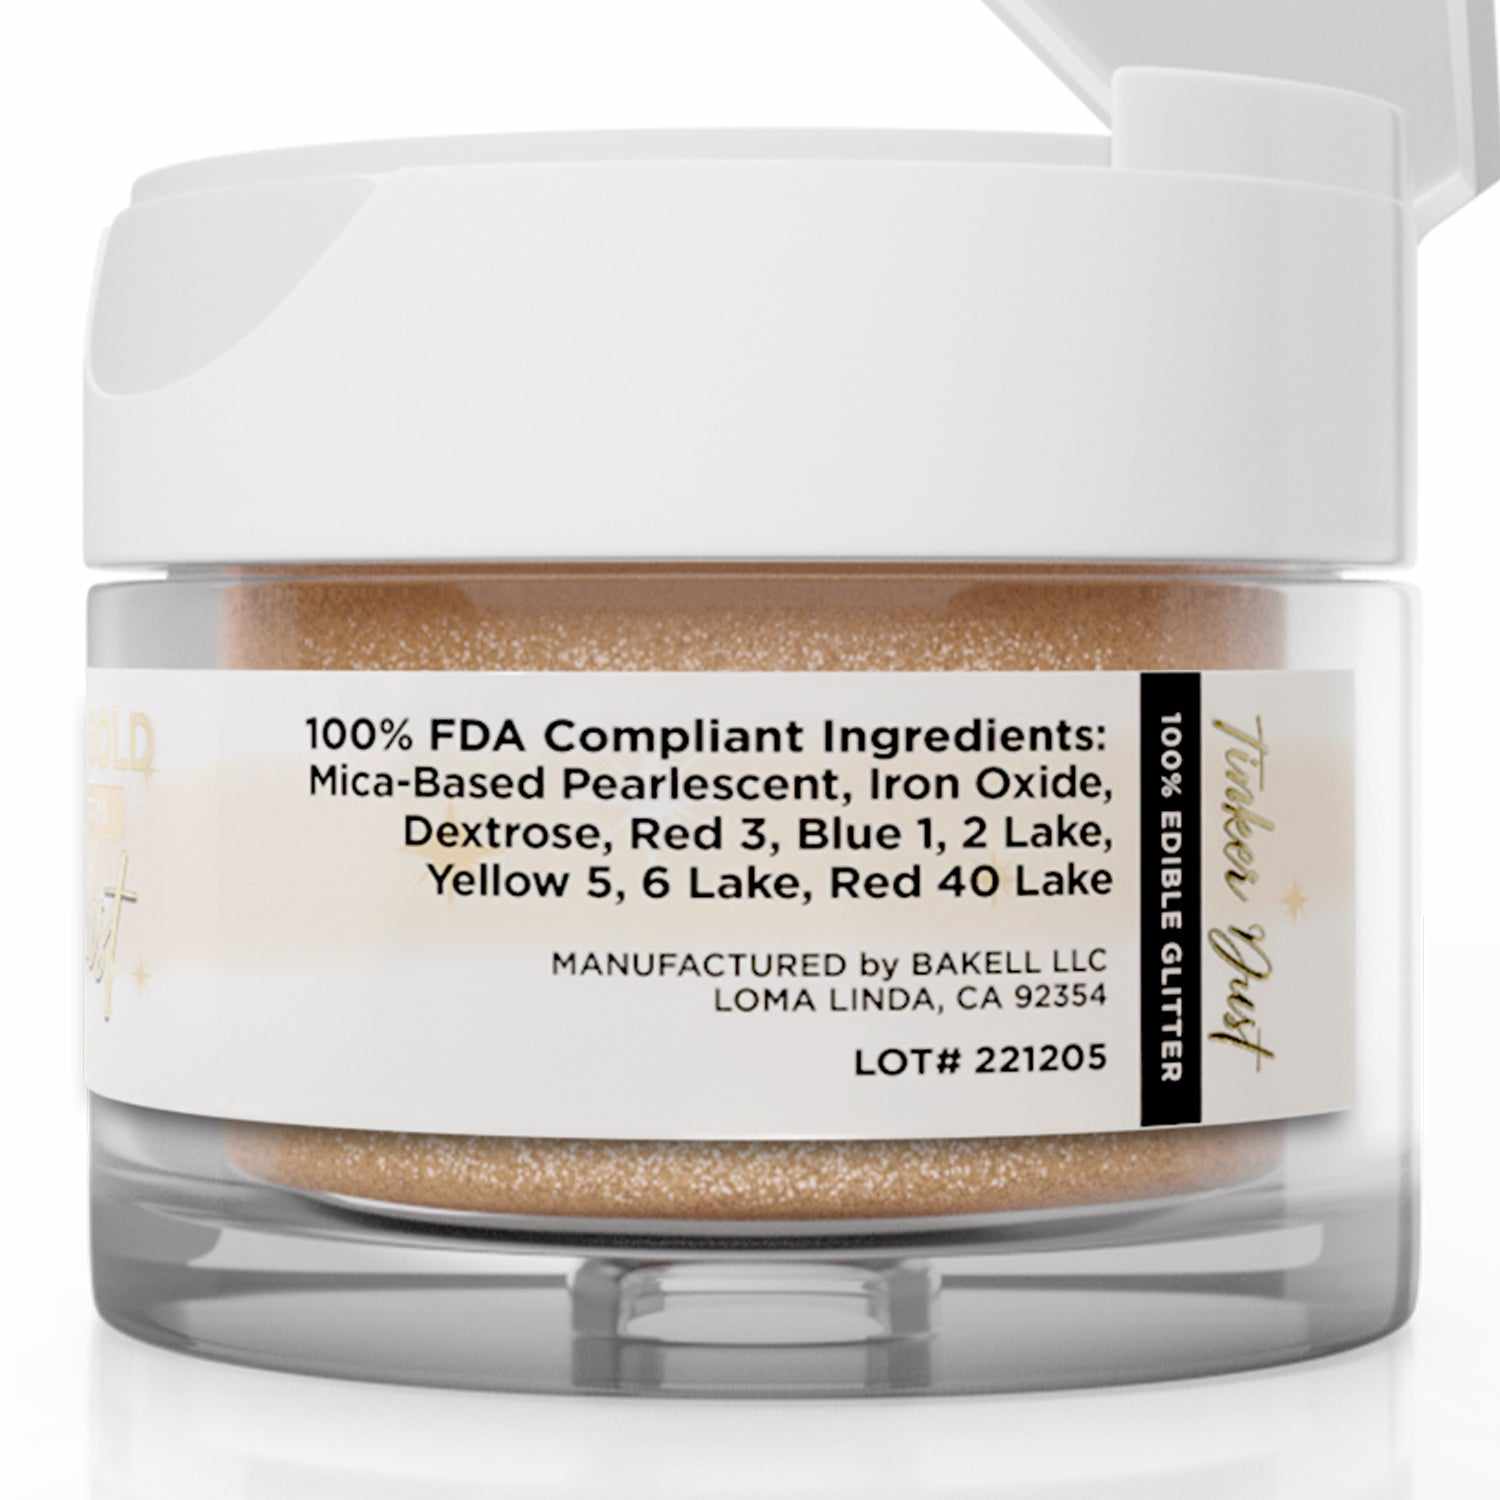 FDA Compliant Label, View of Side of Rose Gold Edible Glitter 5 gram Jar | bakell.com